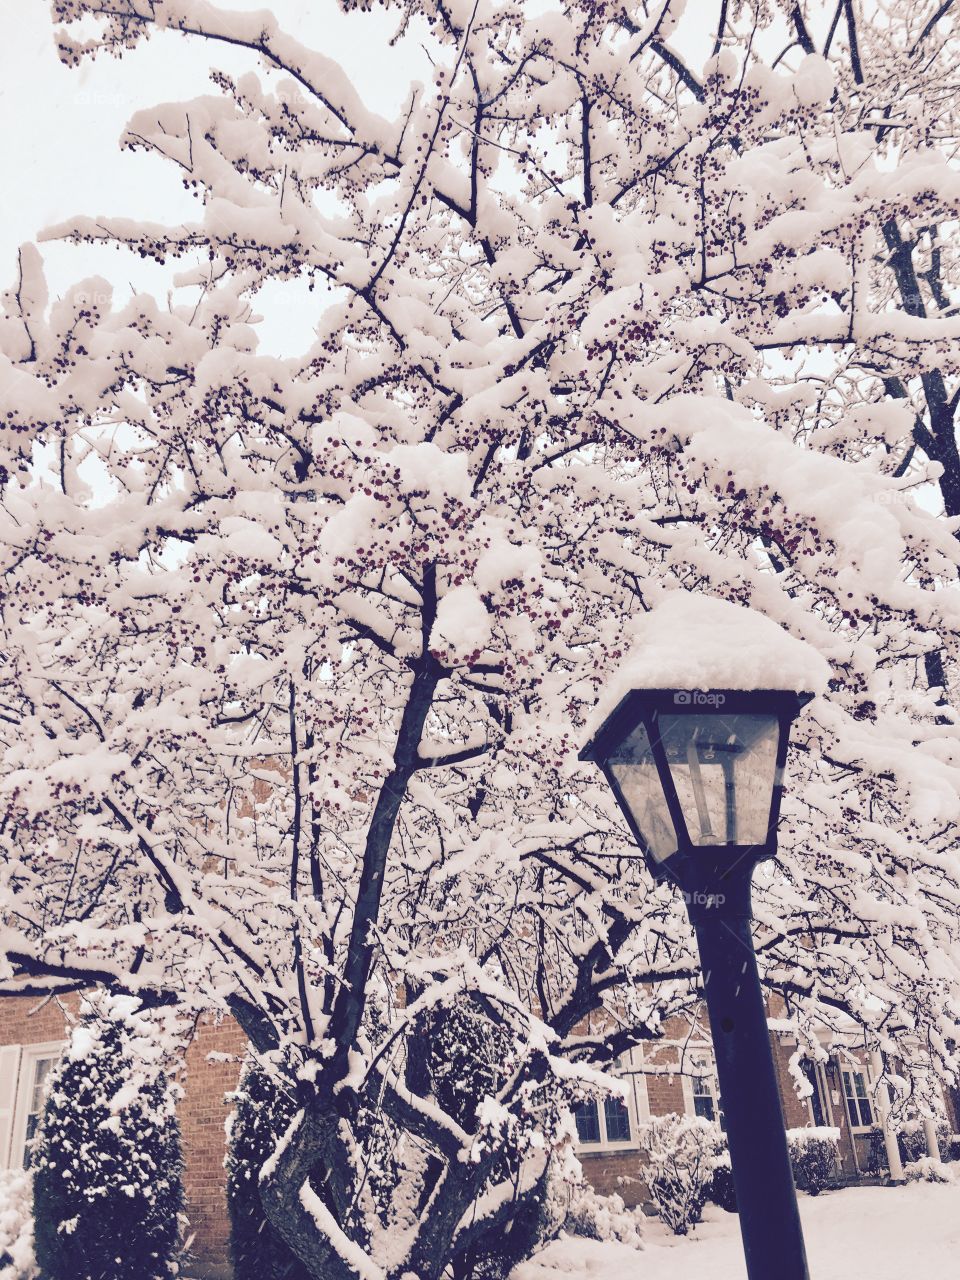 Winter, Snow, Tree, Frost, Branch